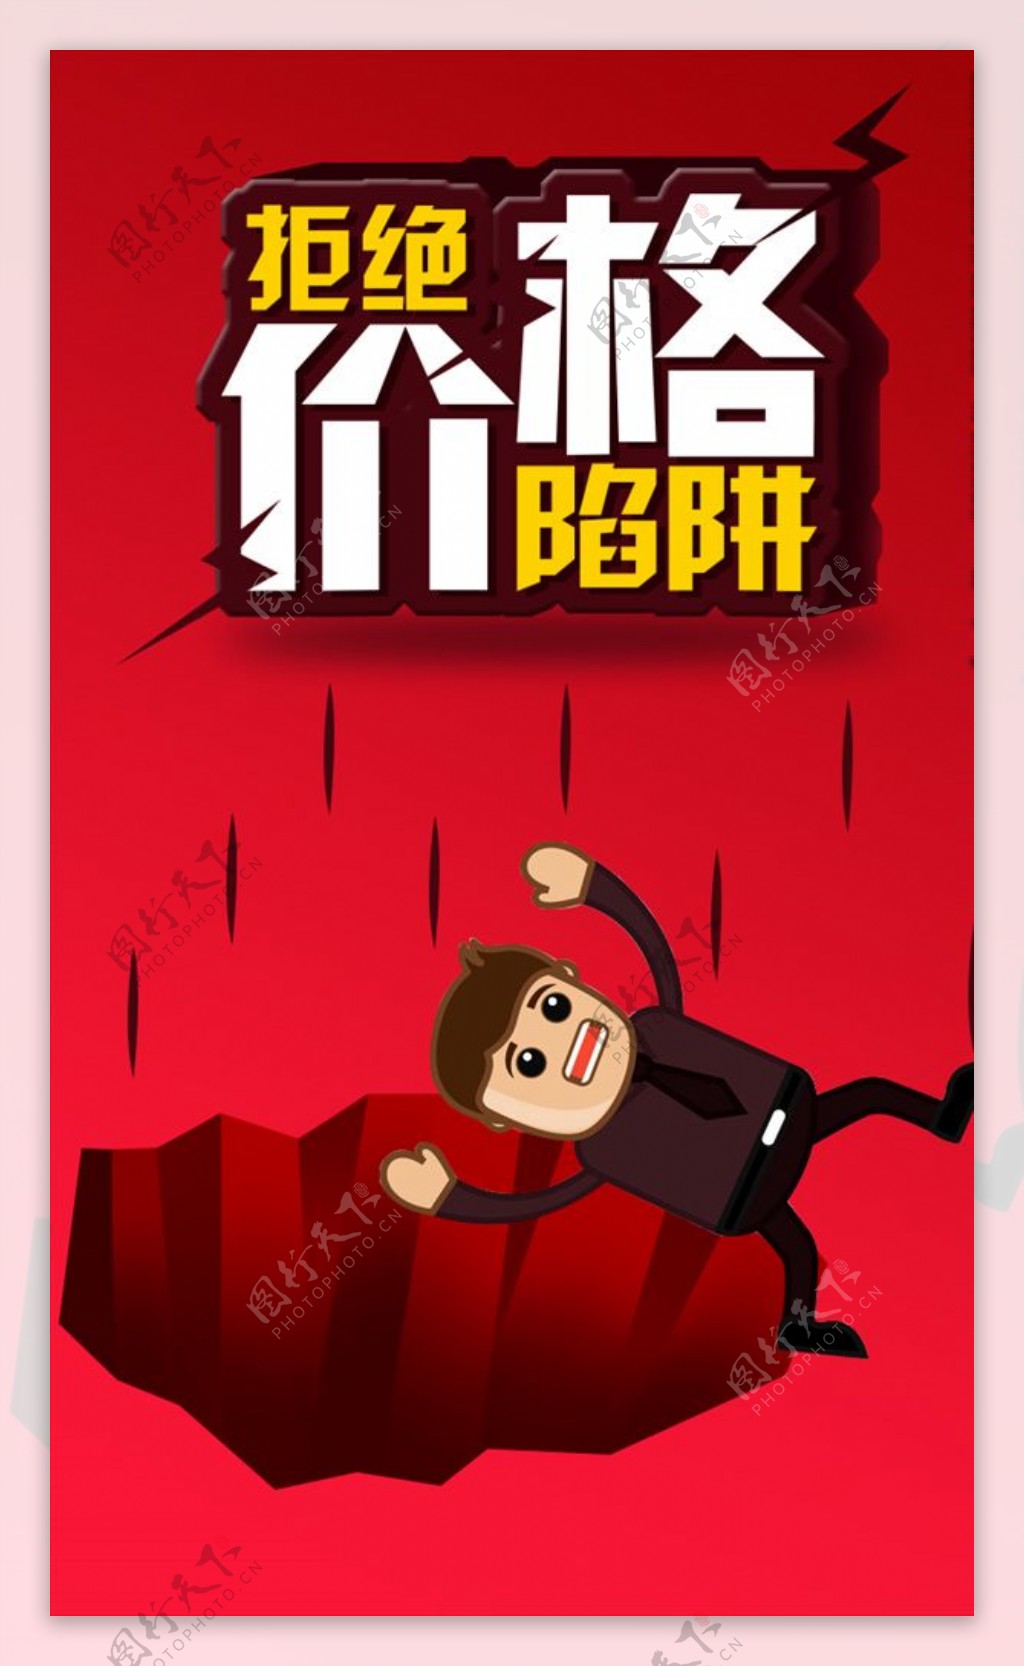 促销广告banner推广图